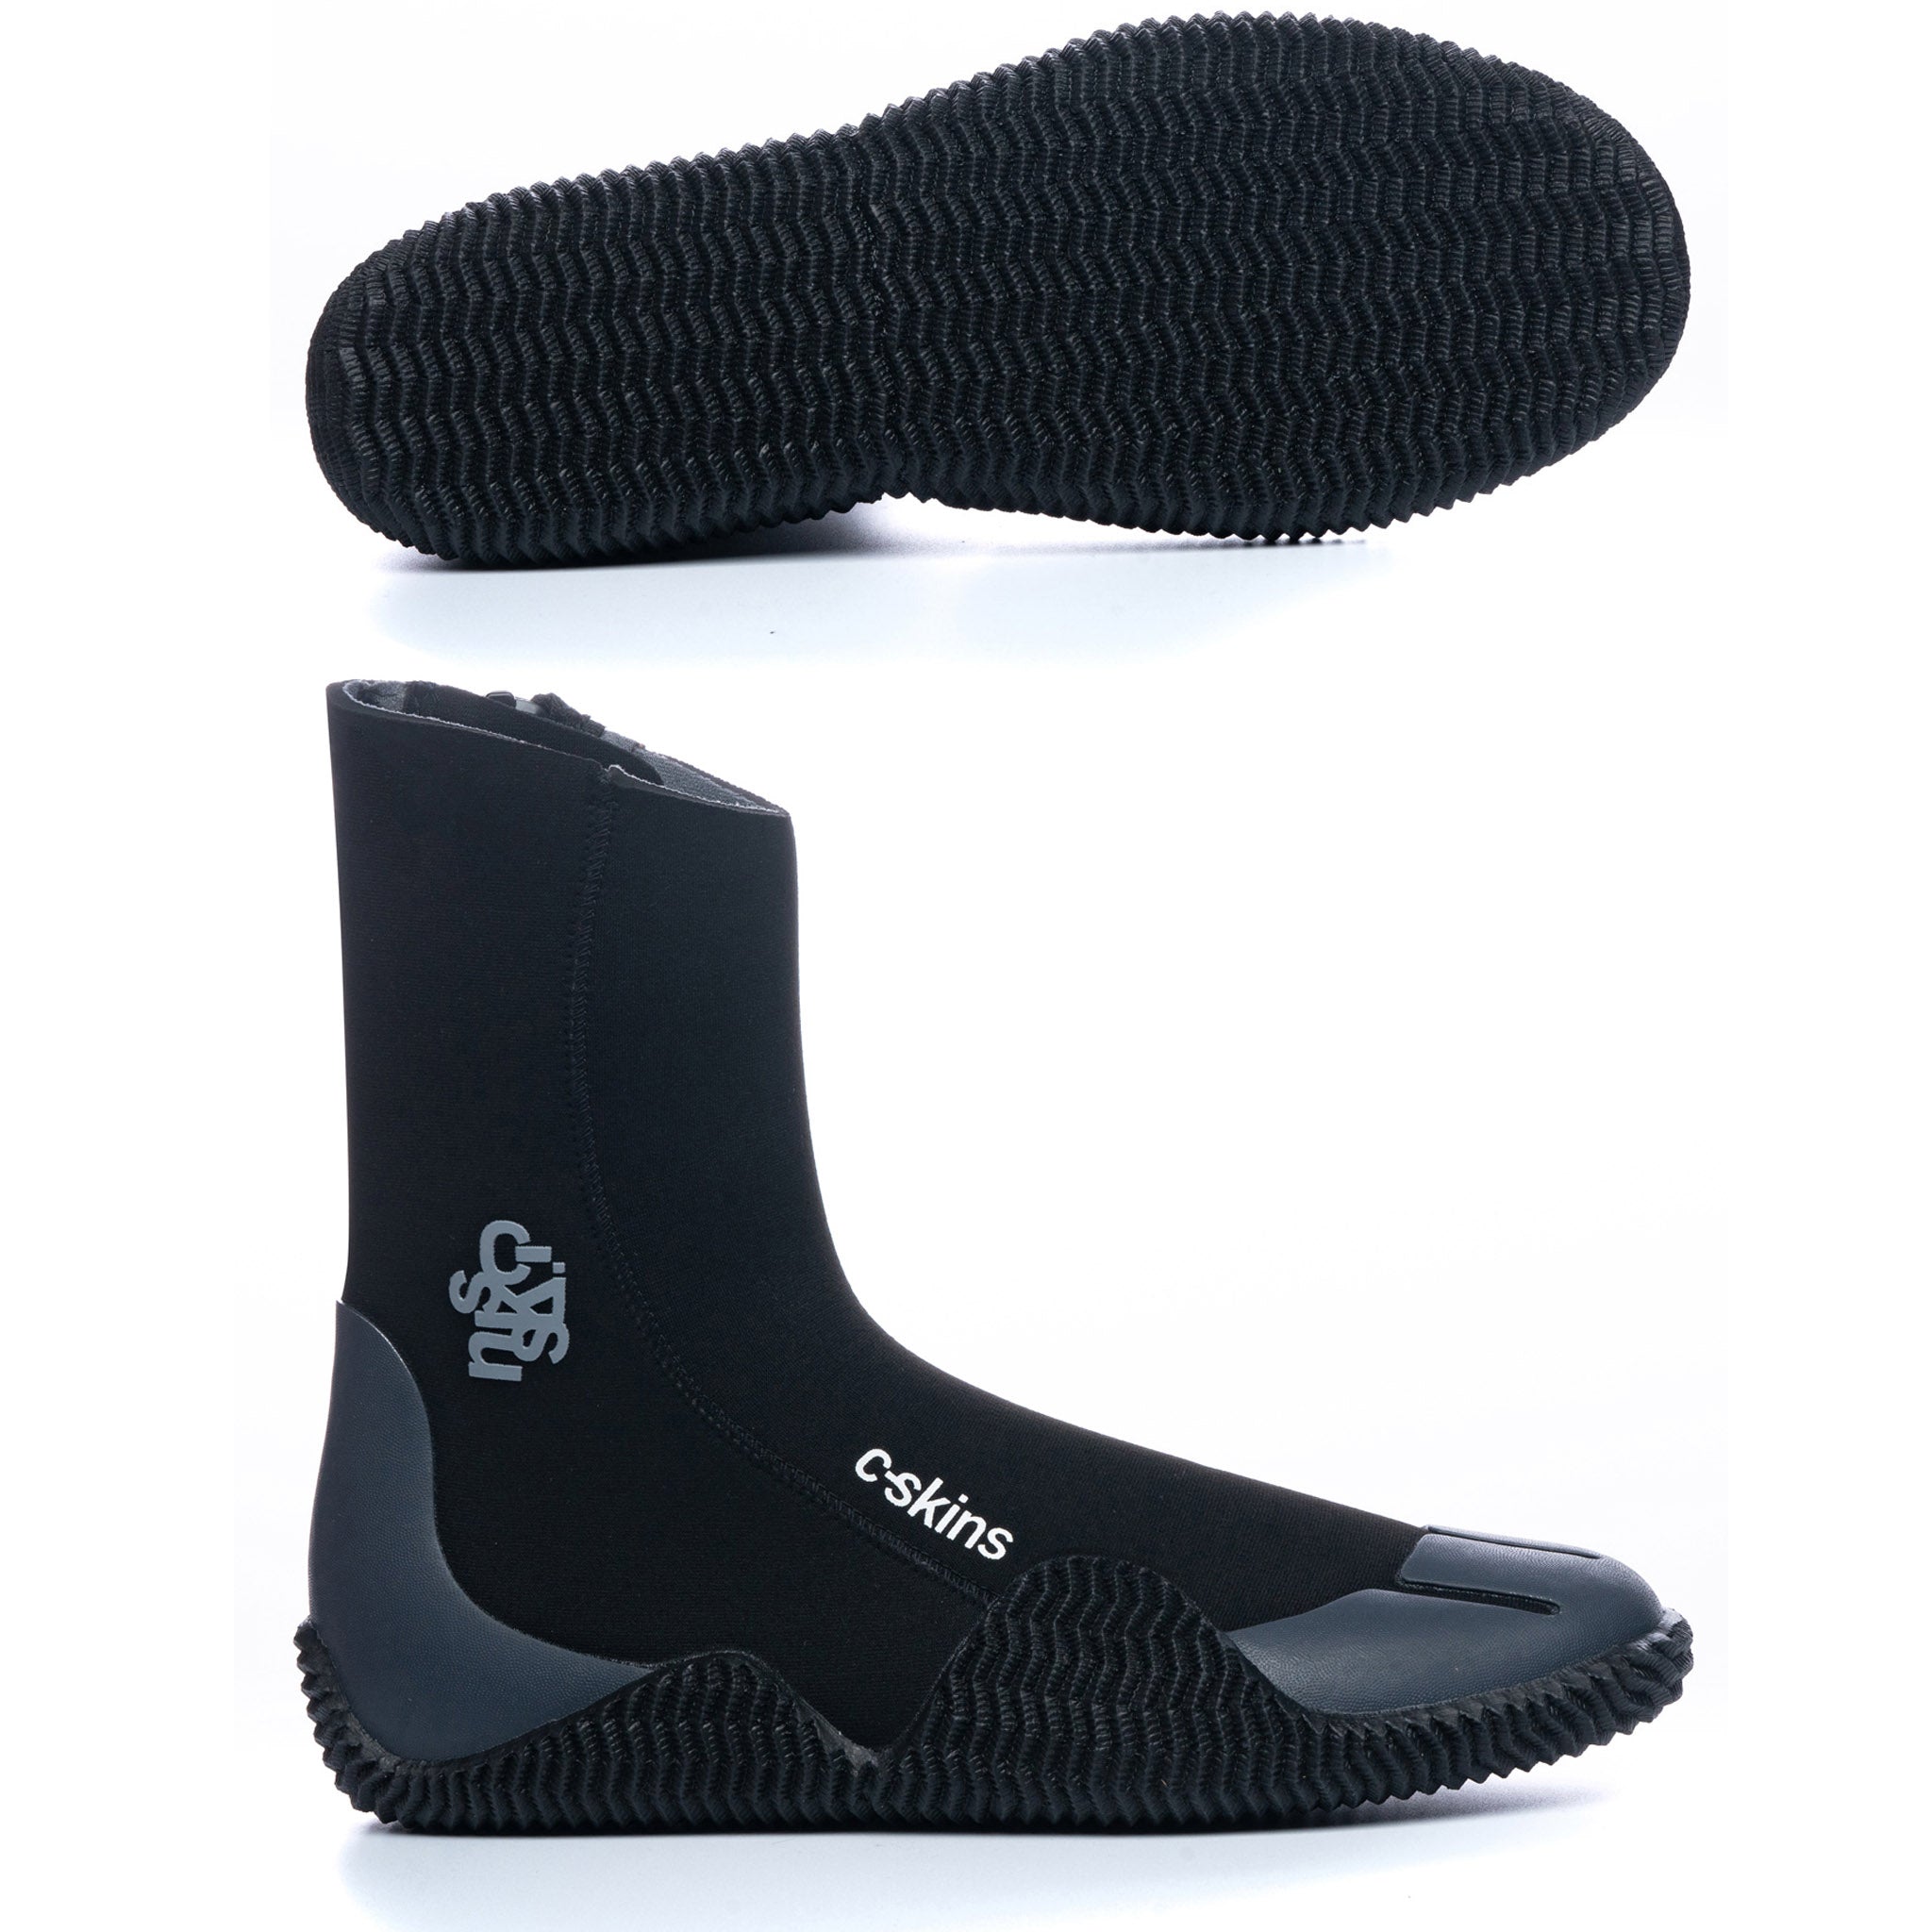 C-Skins Legend Adult 5mm Zipped Wetsuit Boots